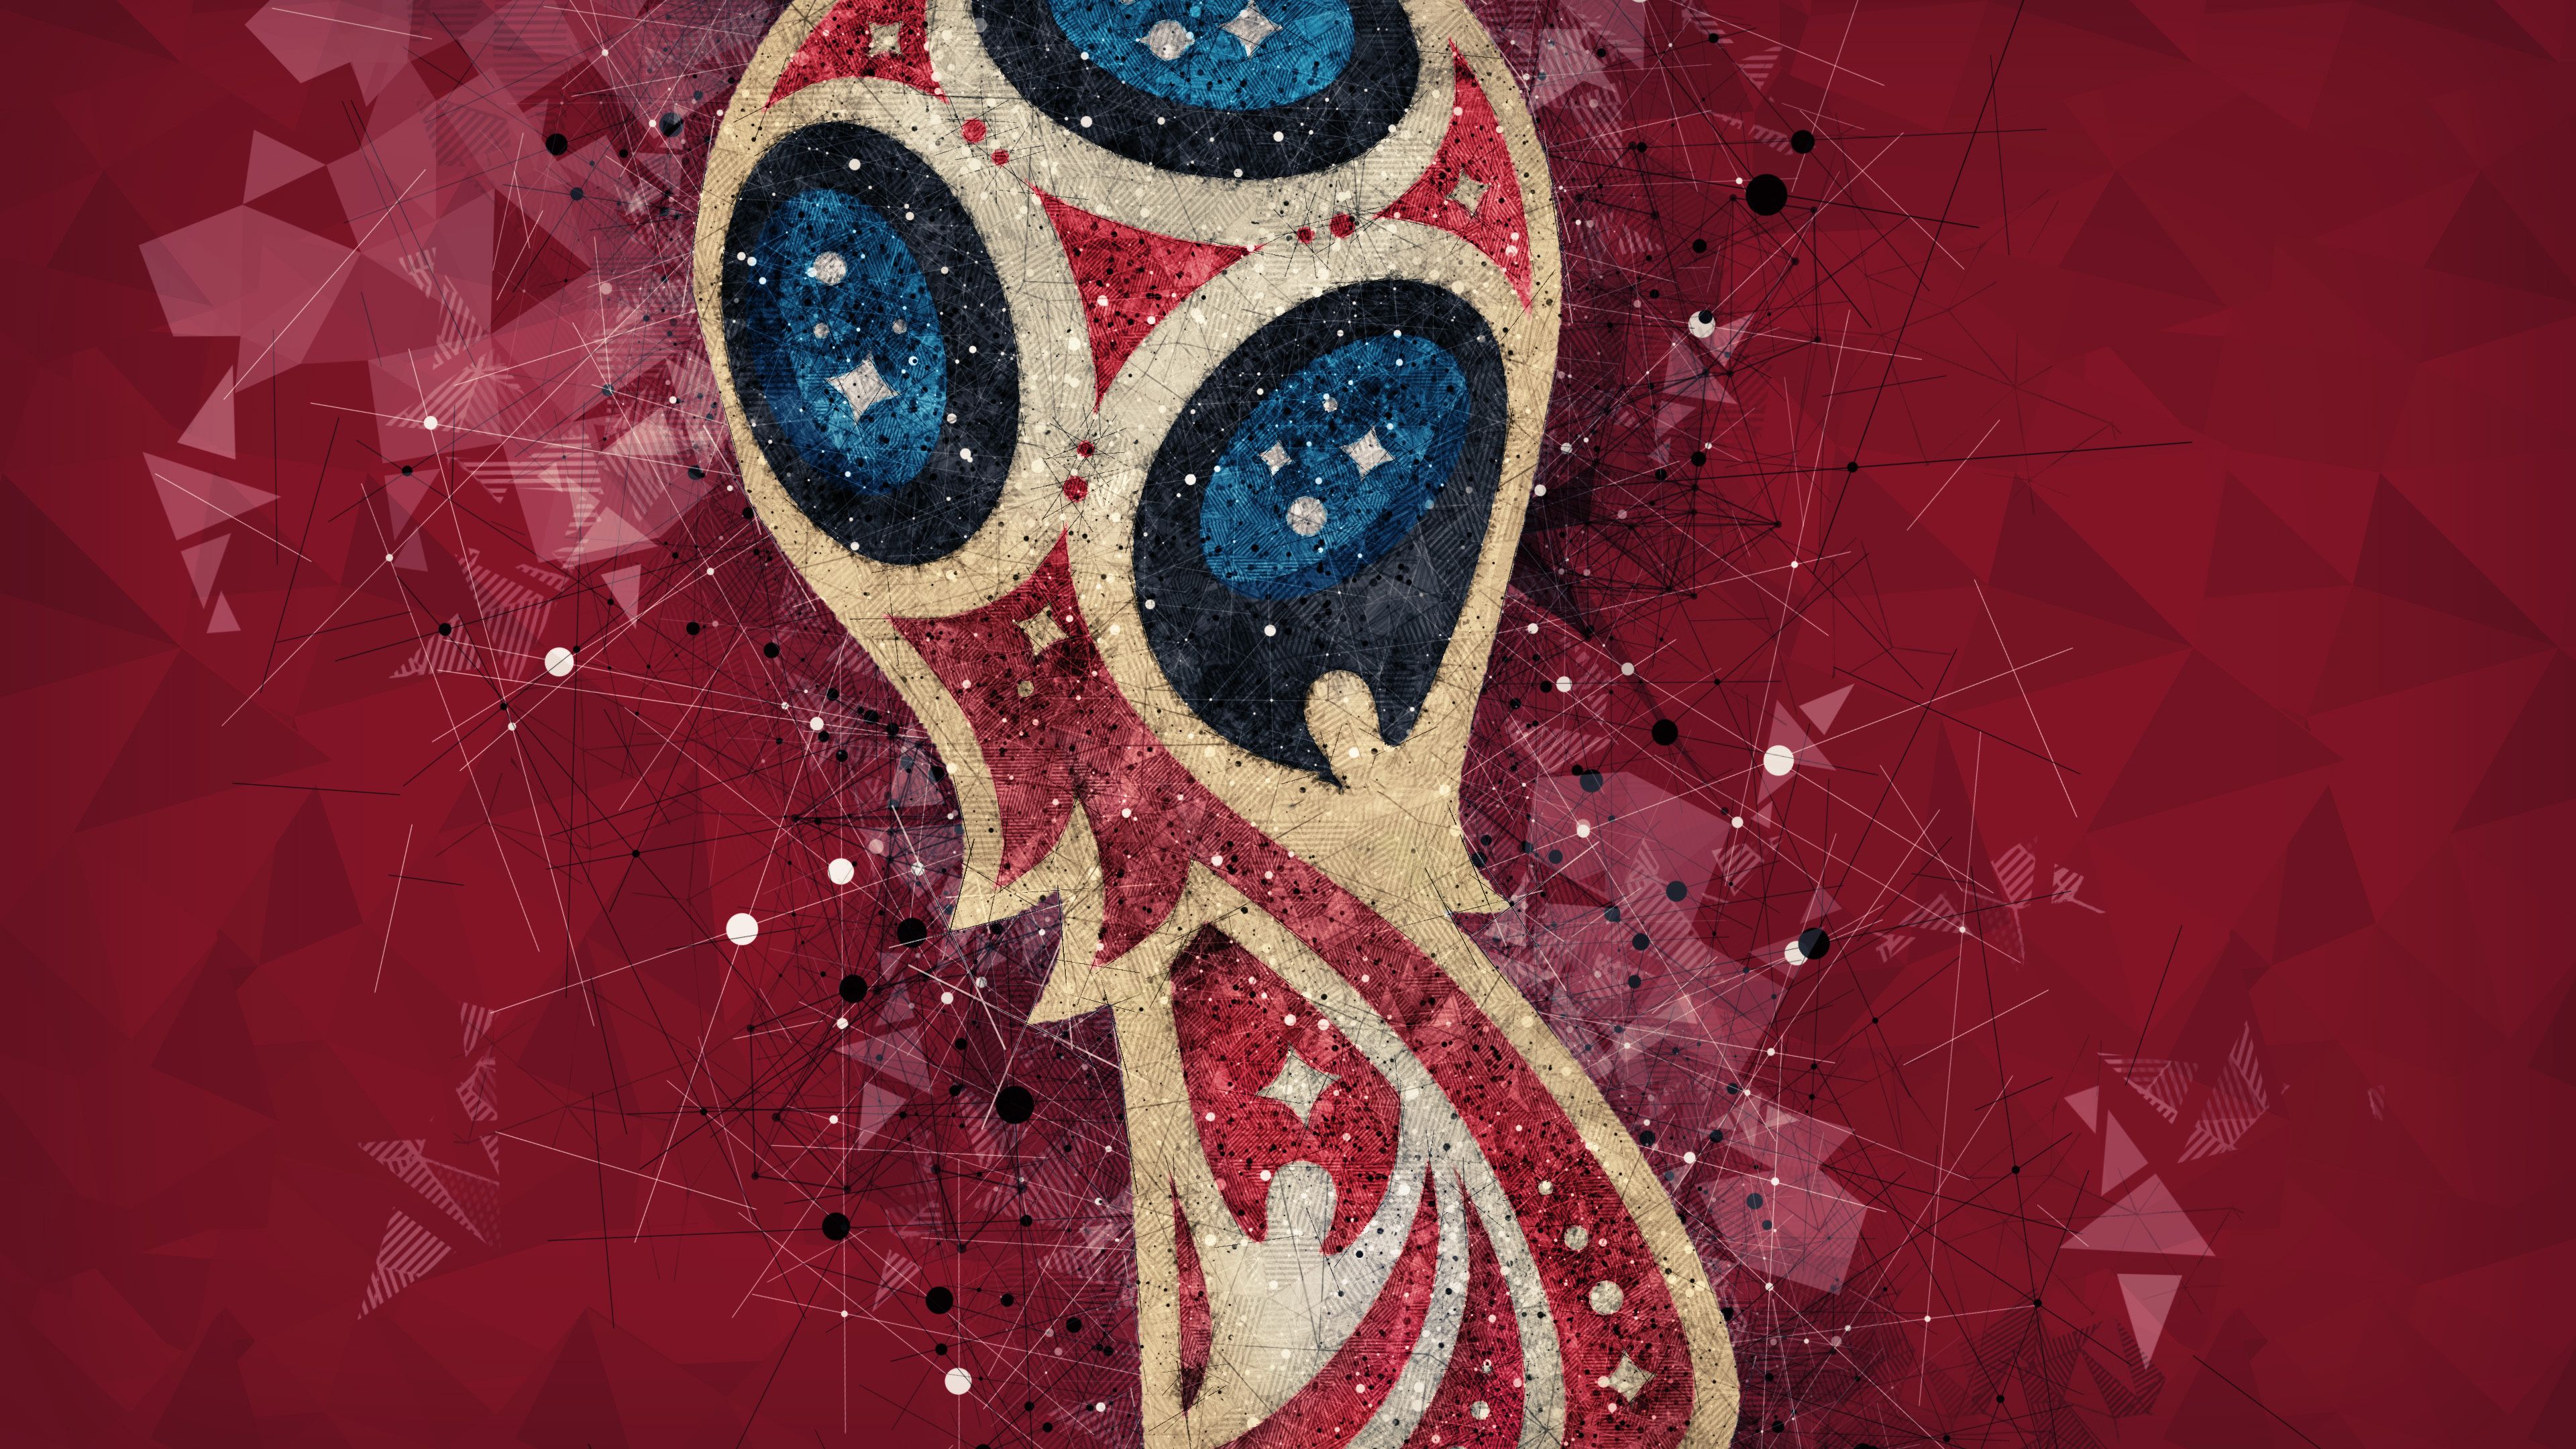 Wallpaper 4k FIFA World Cup Russia Logo 2018 Games Wallpaper, 4k Wallpaper, Fifa Wallpaper, Fifa World Cup Russia Wallpaper, Football Wallpaper, Games Wallpaper, Hd Wallpaper, Logo Wallpaper